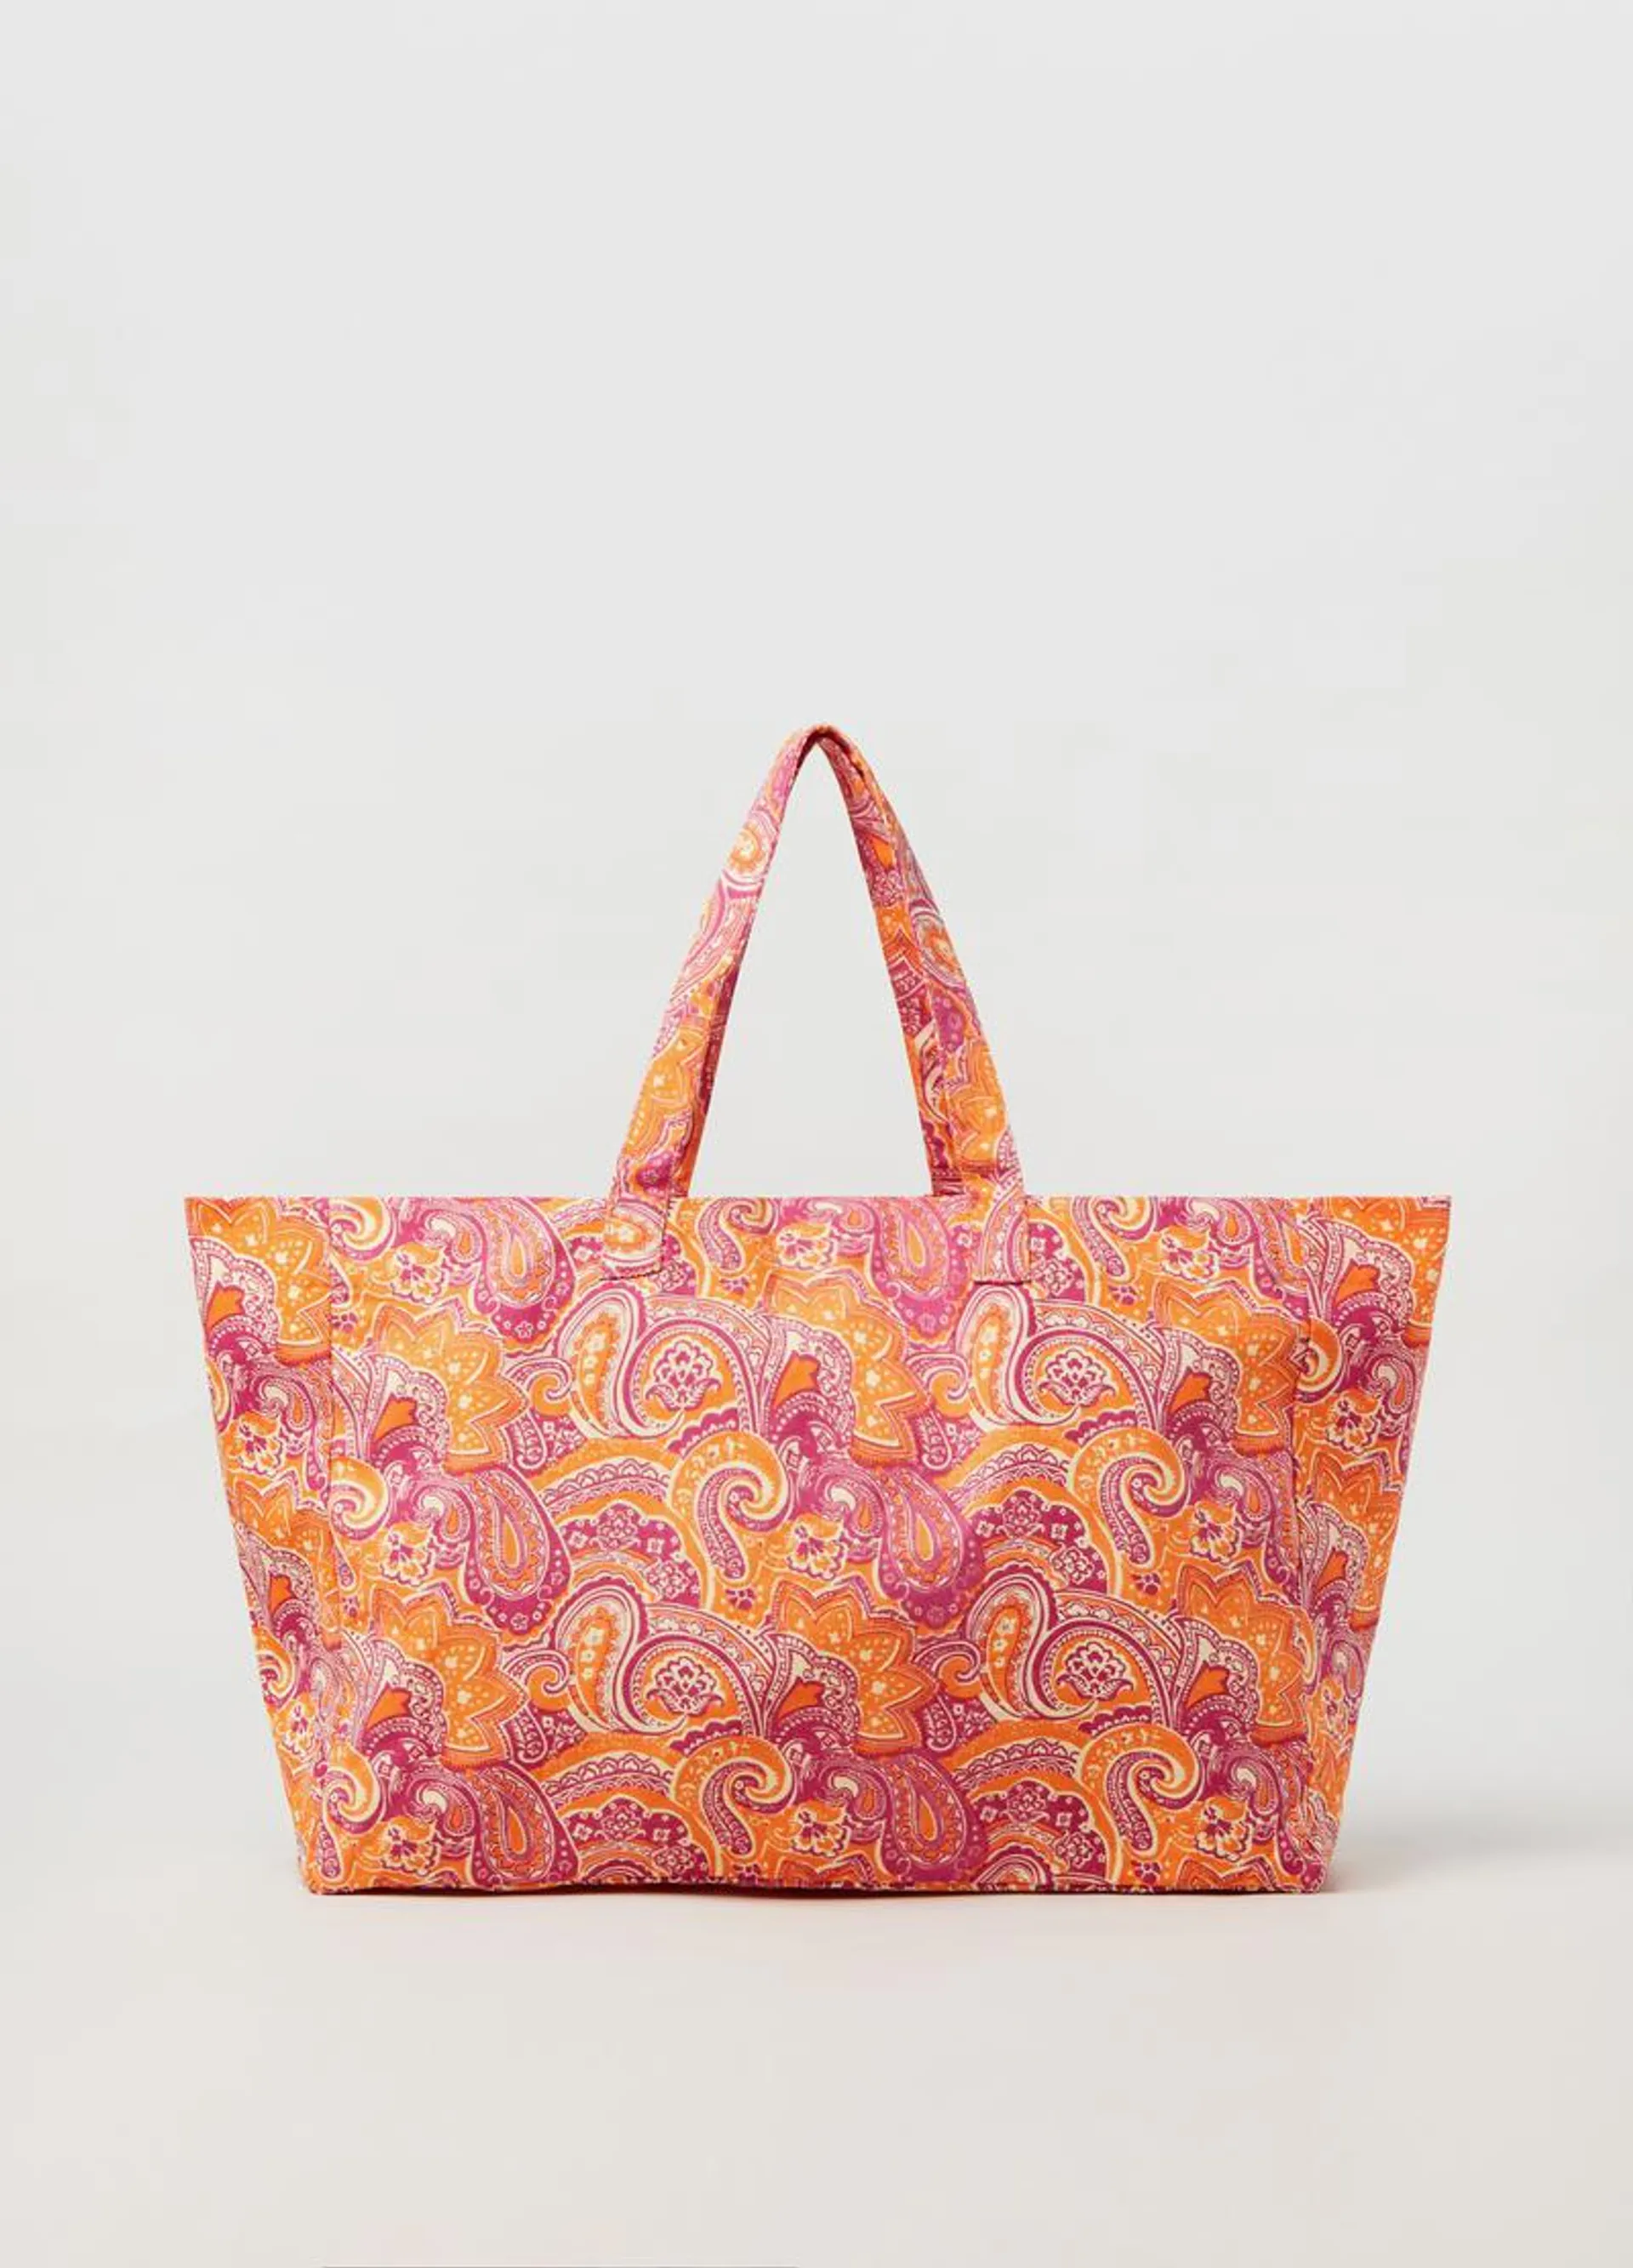 Shopping bag with paisley print